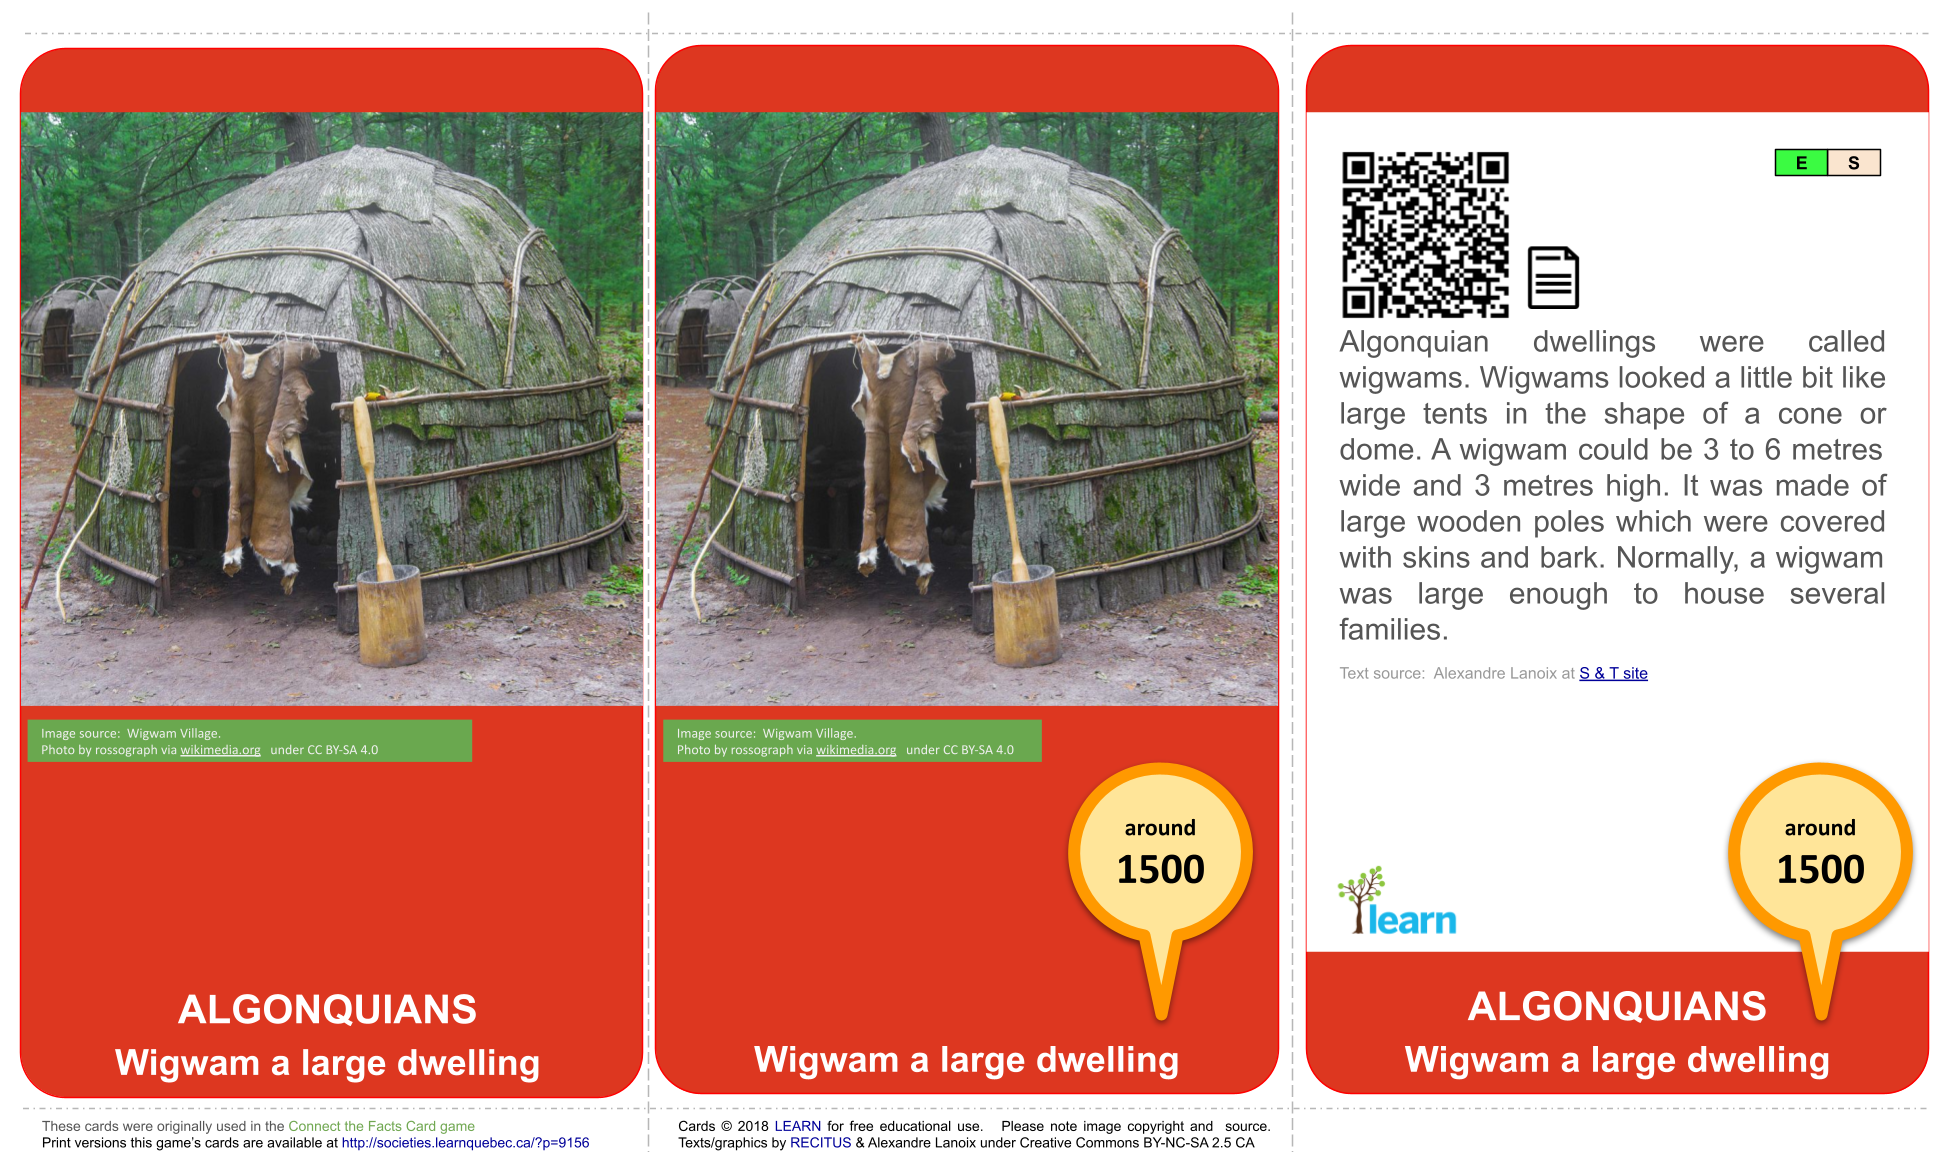 Algonquians: Wigwam is a large dwelling